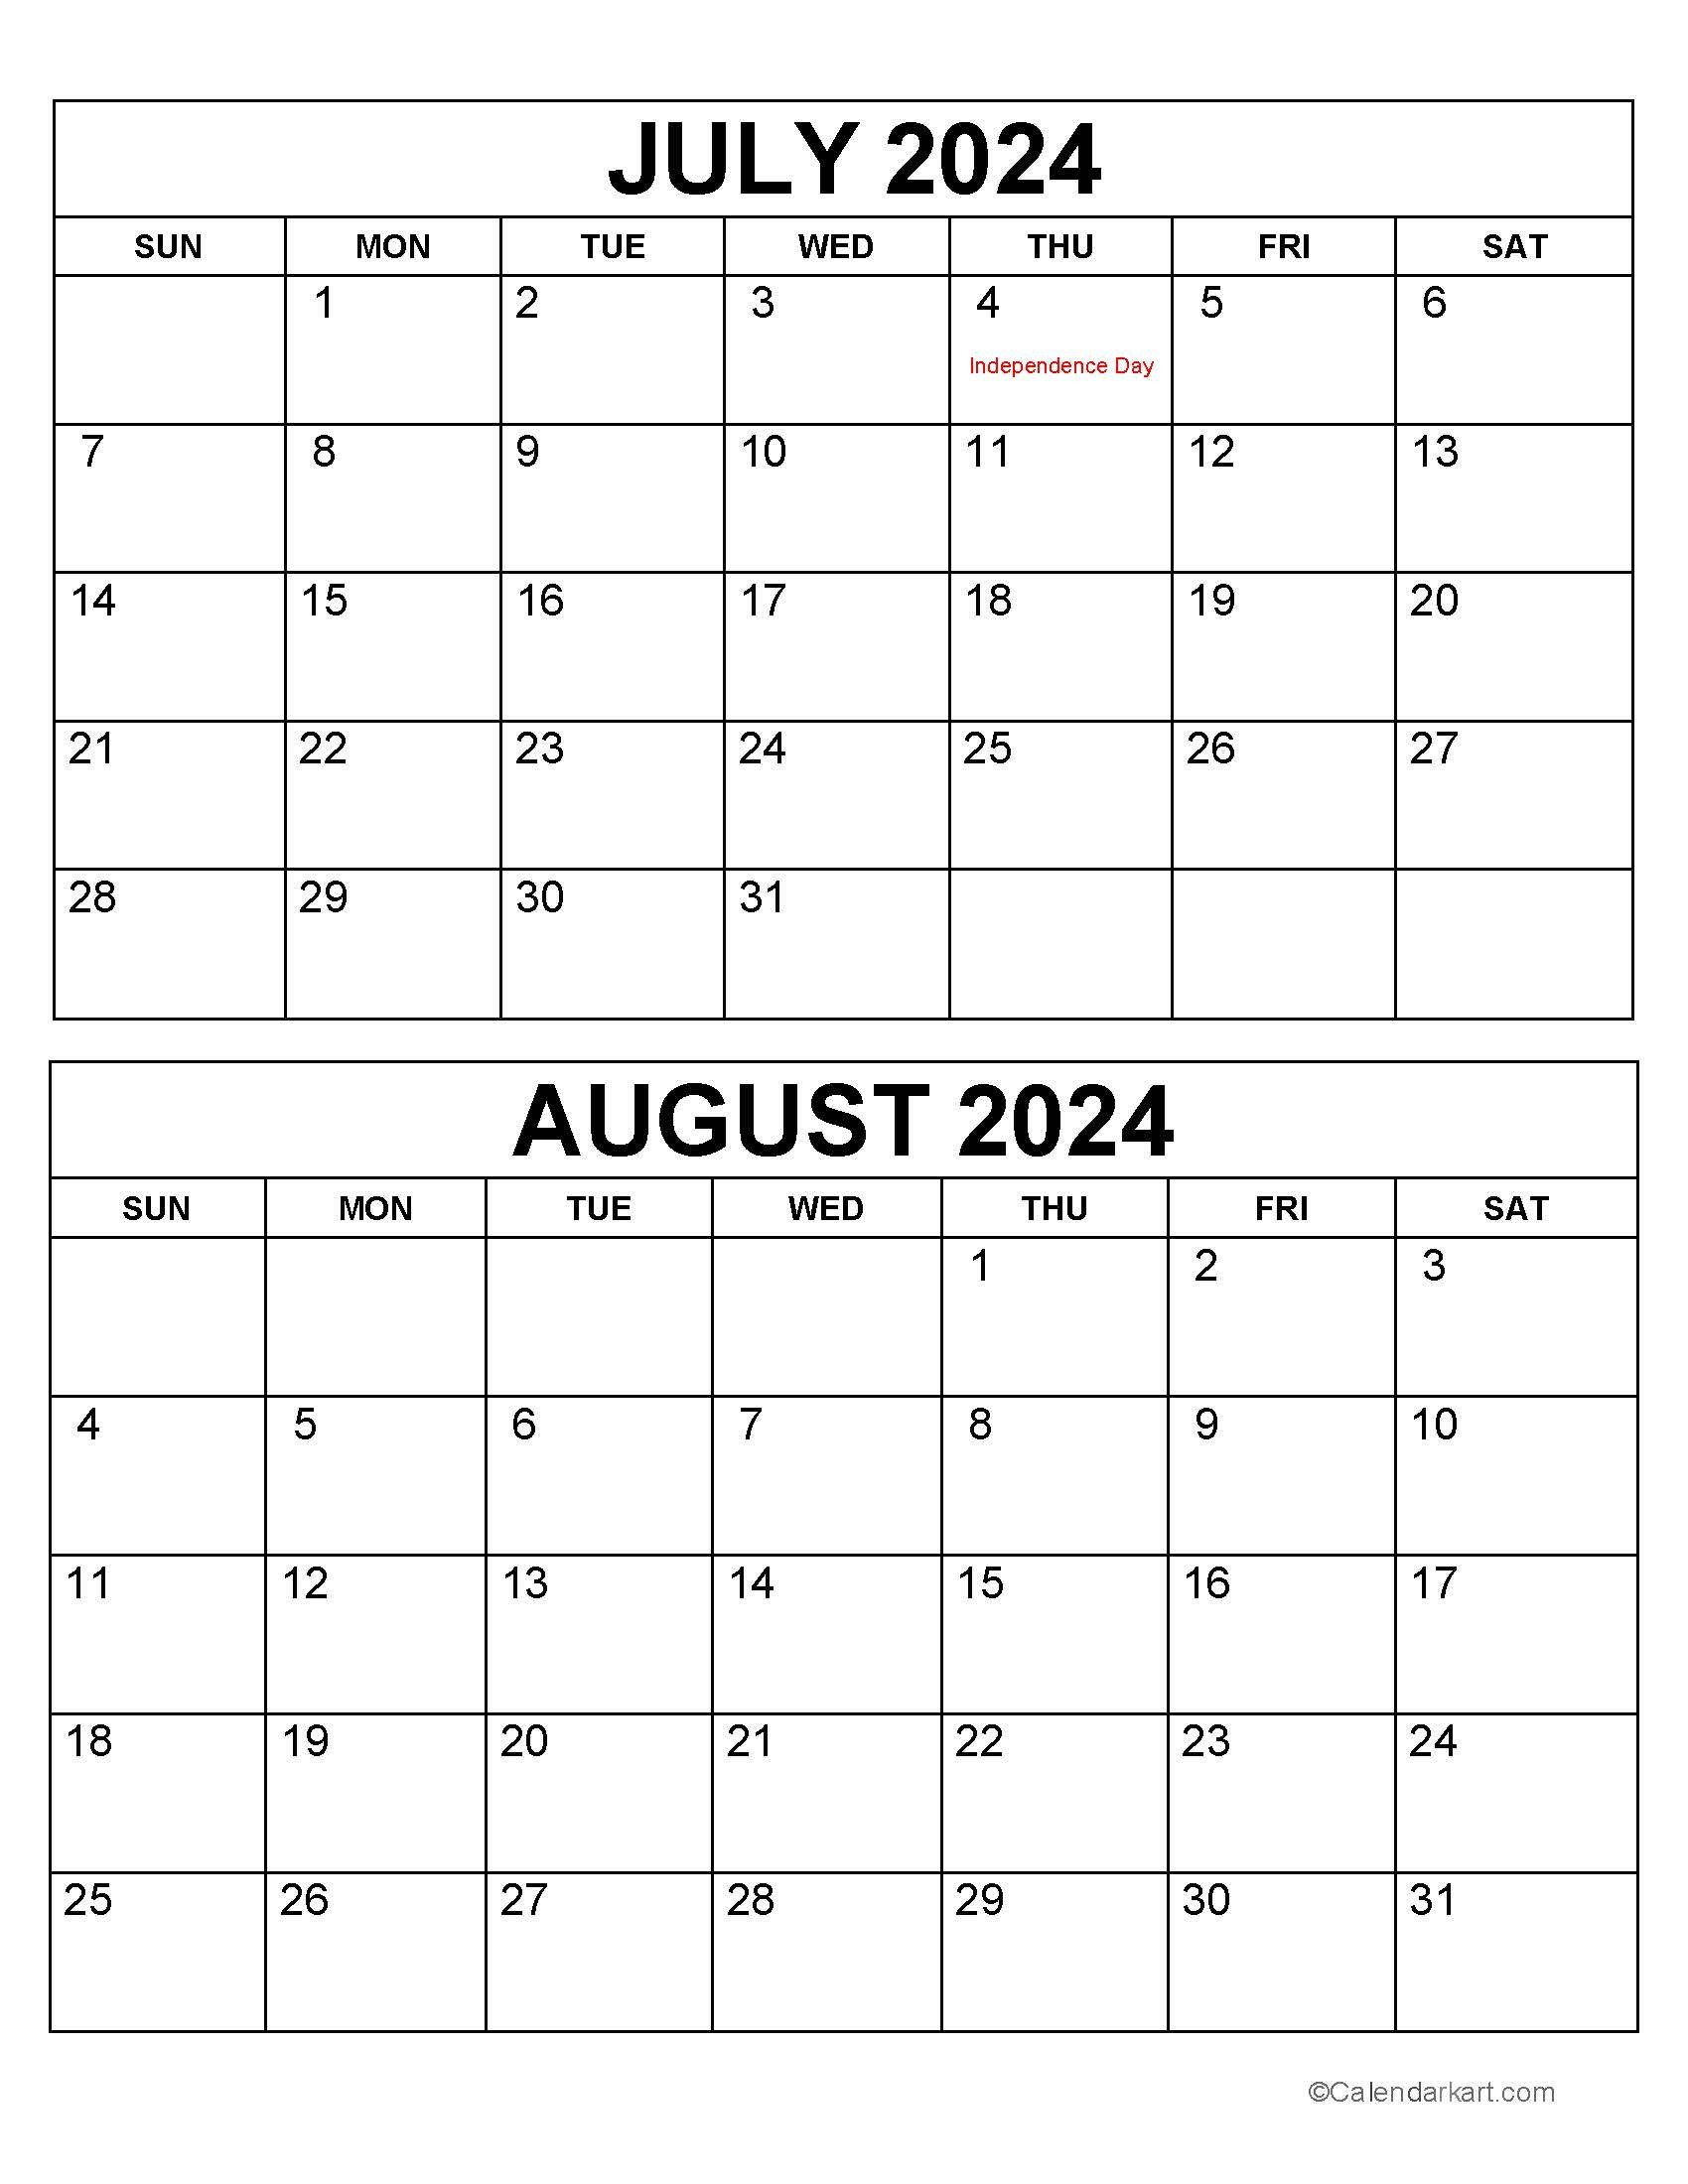 Printable July August 2024 Calendar | Calendarkart with Calendar 2024 July August